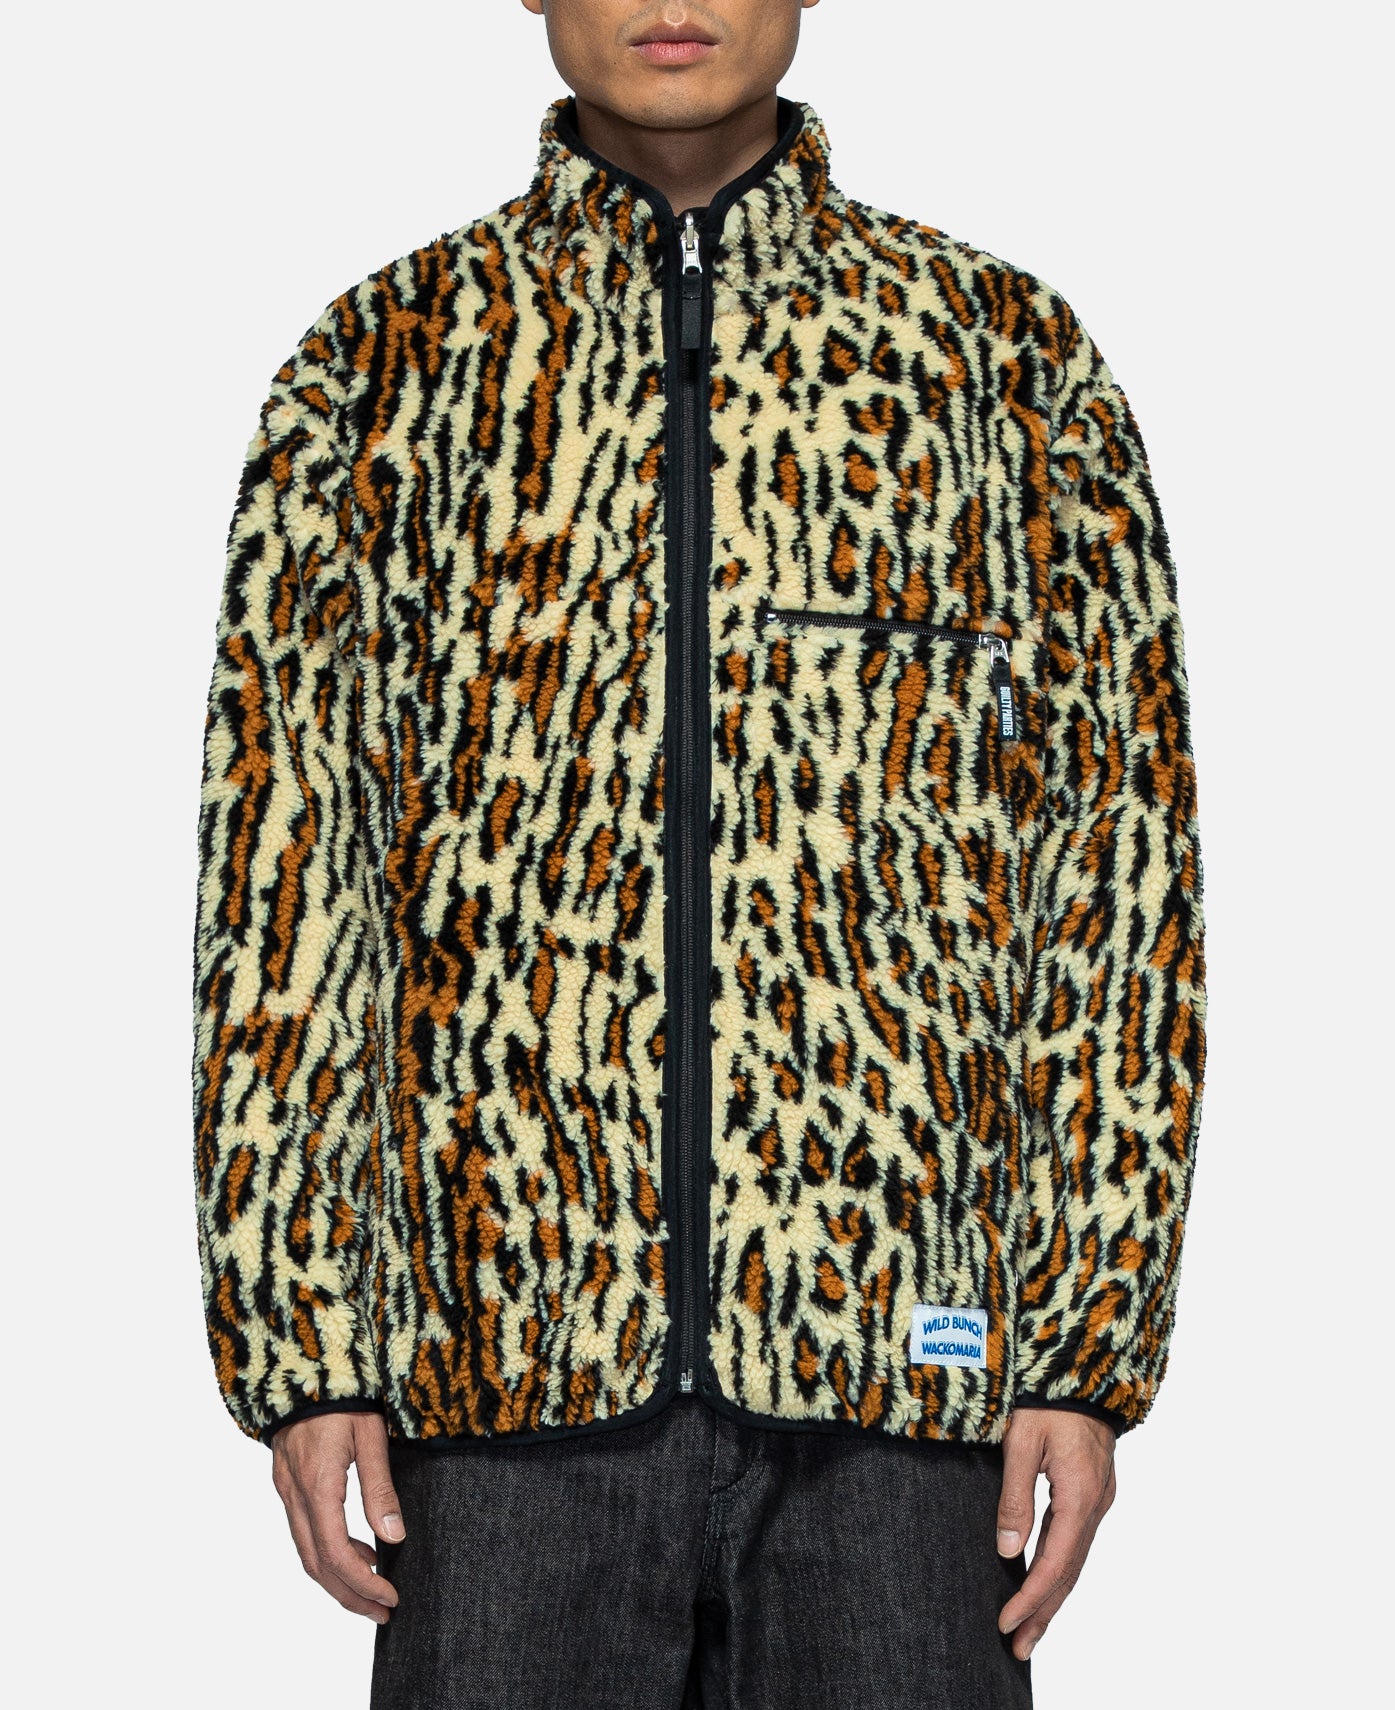 Wacko Maria - Wild Bunch / Reversible Boa Fleece Jacket (Black